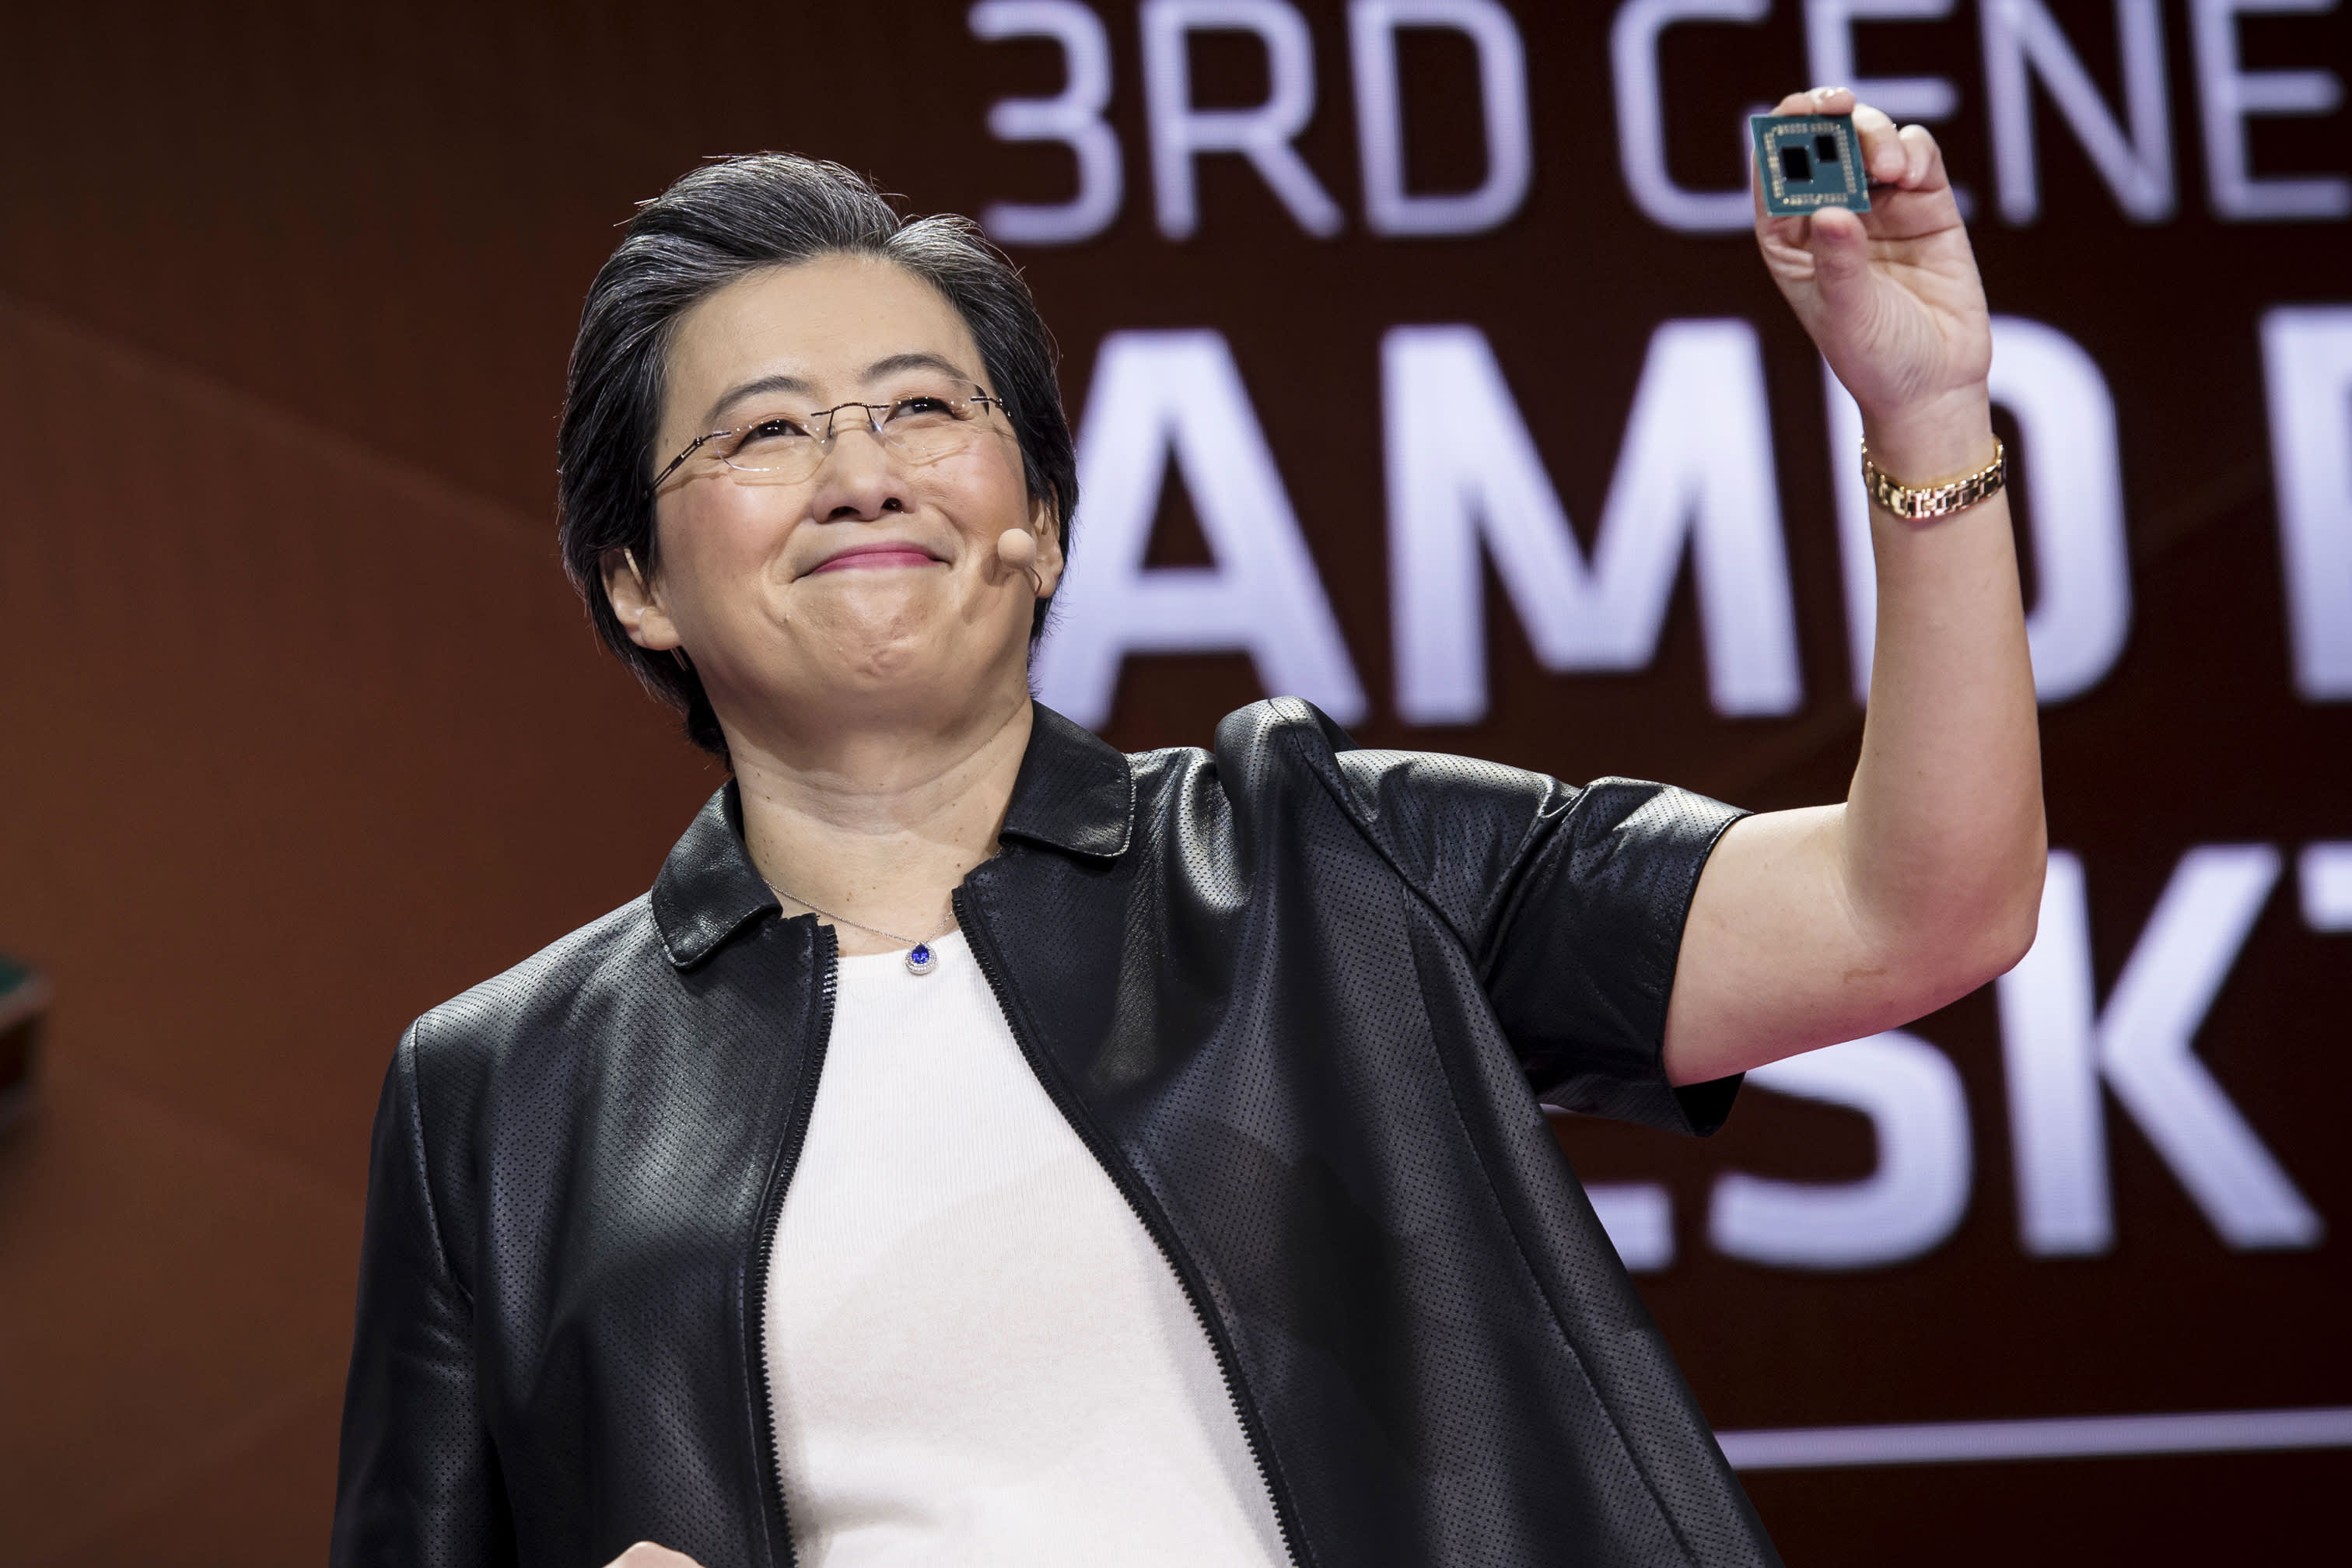 AMD (AMD) earnings Q4 2020